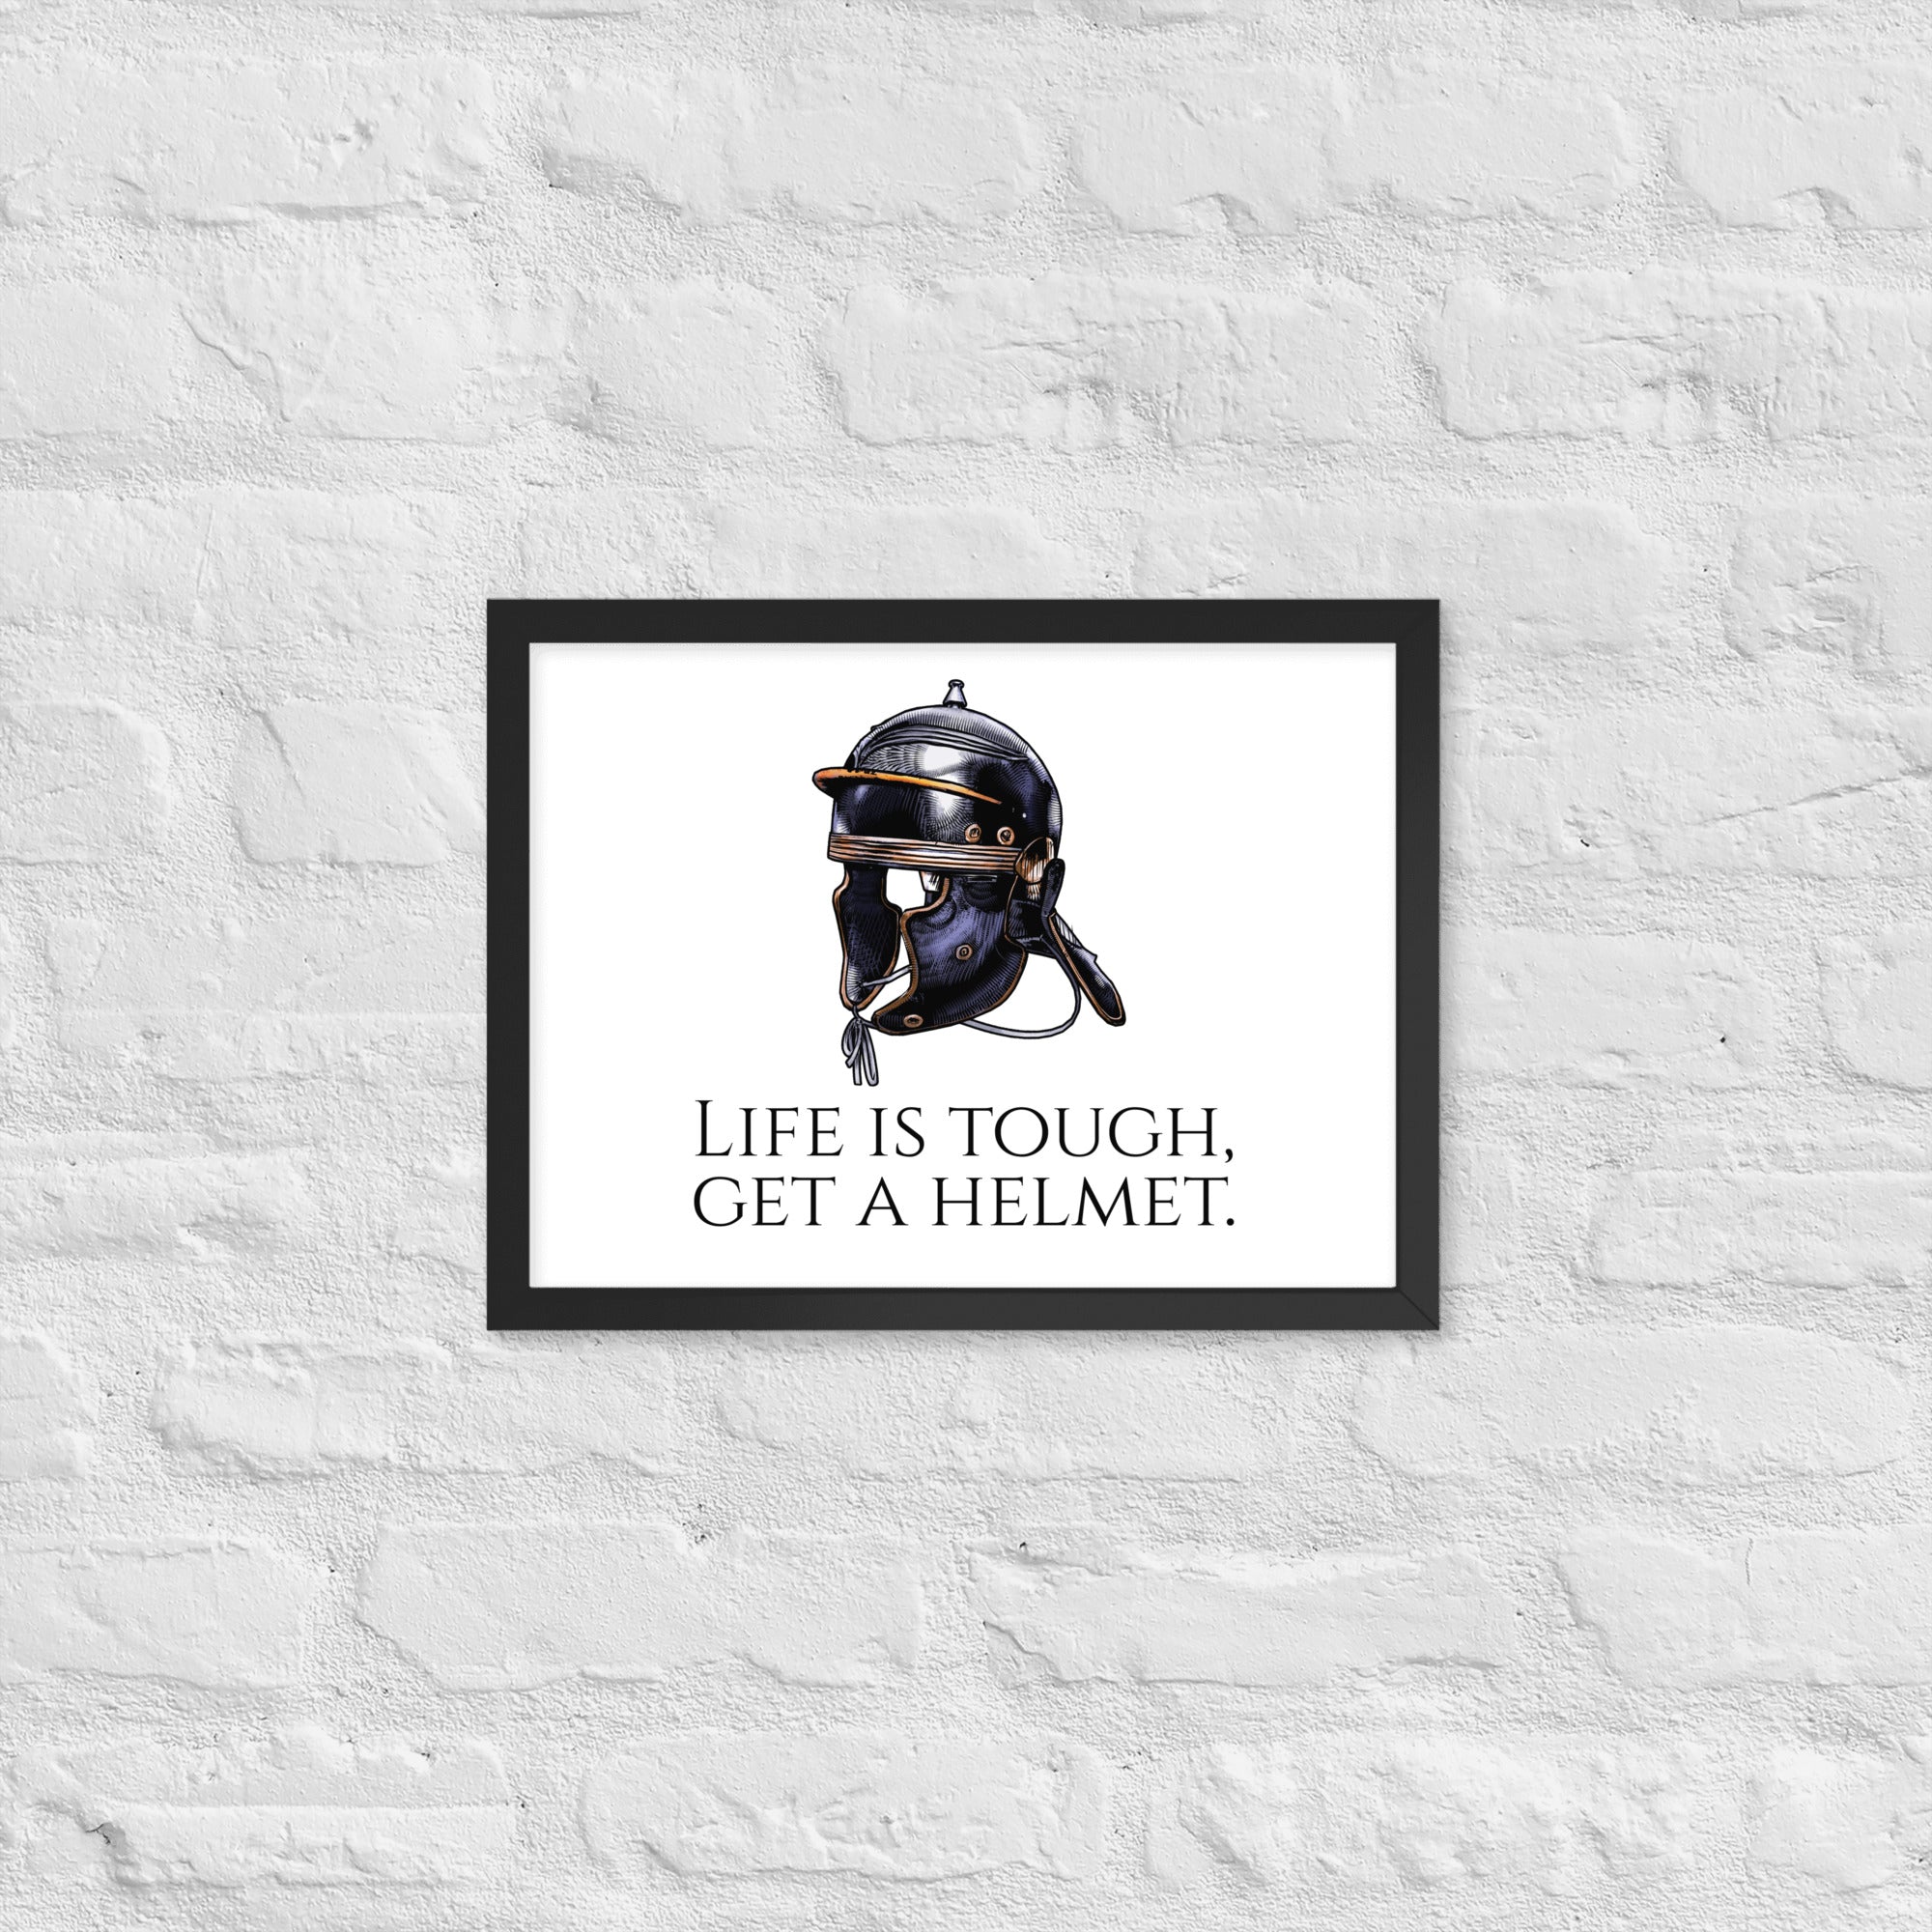 Life Is Tough, Get A Helmet - Ancient Rome Legionary Helmet Framed poster